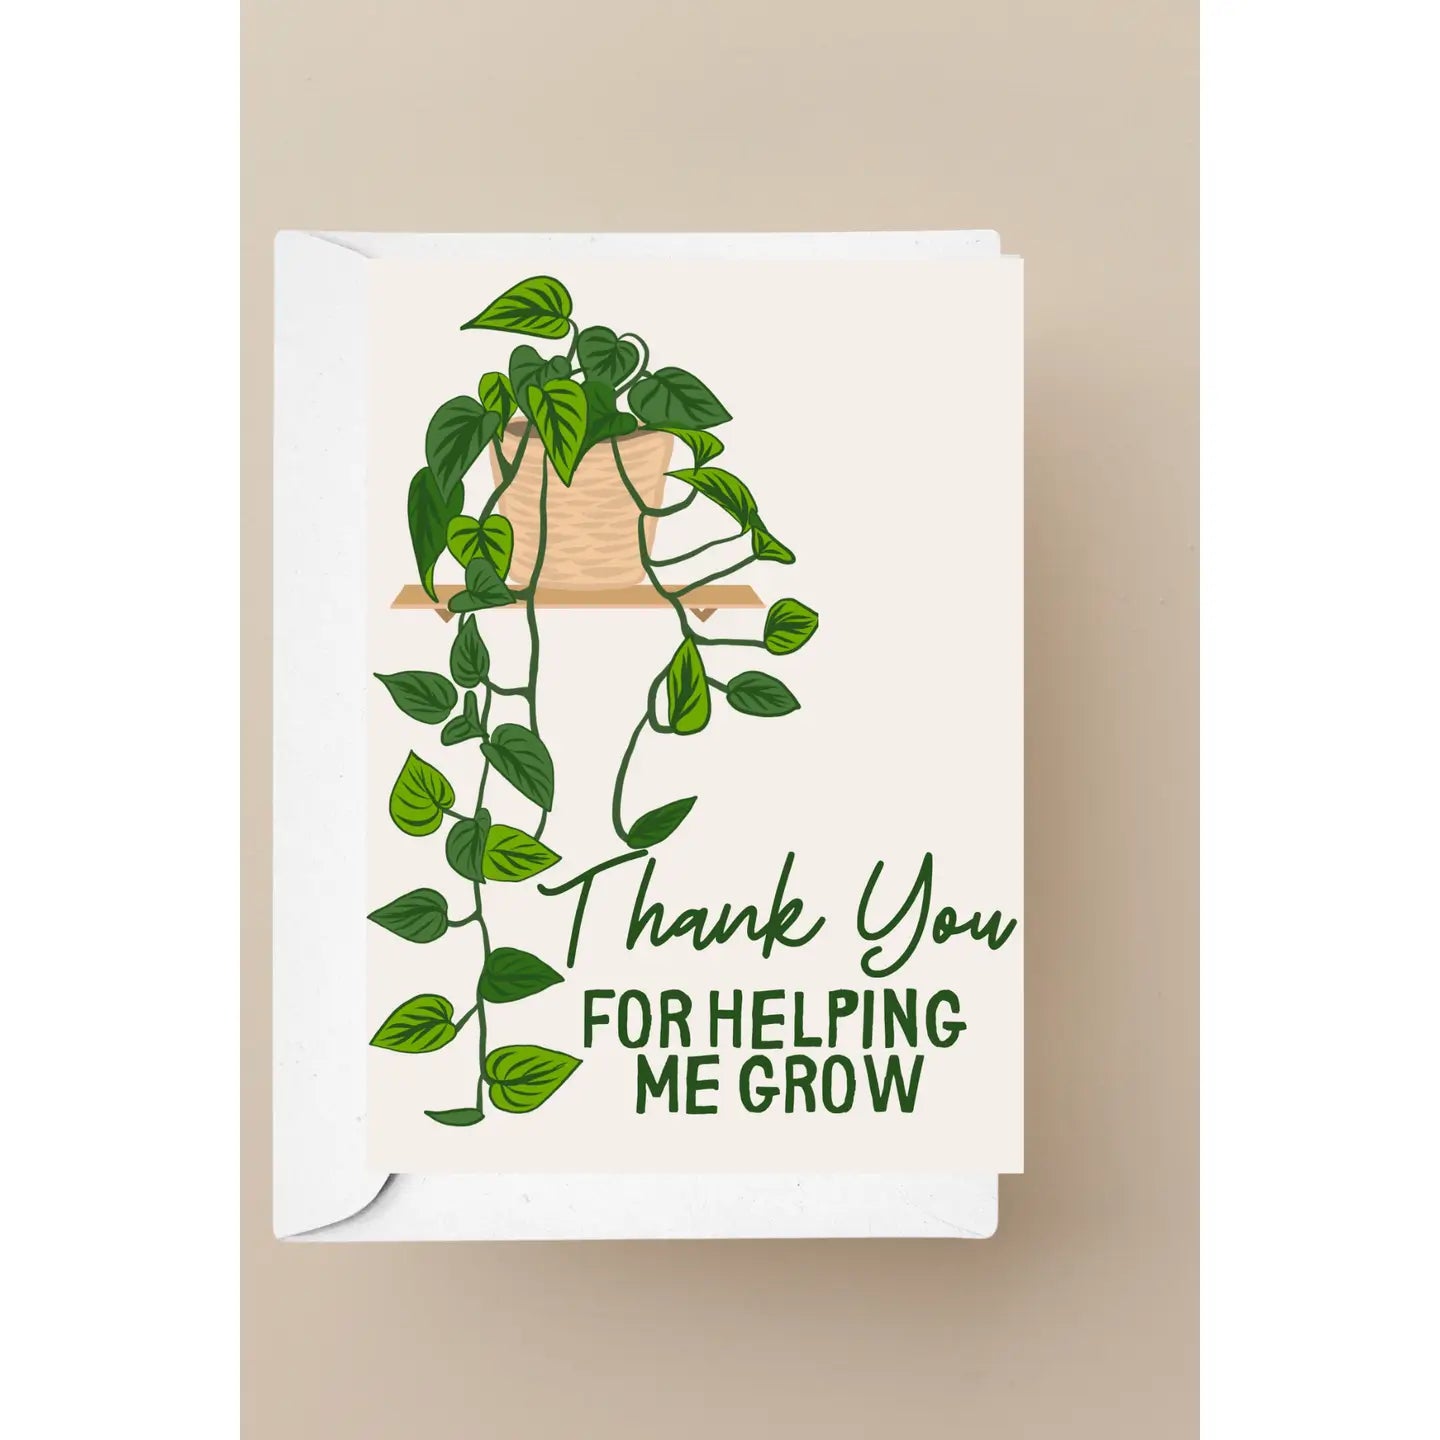 Helping Me Grow - Greeting Card